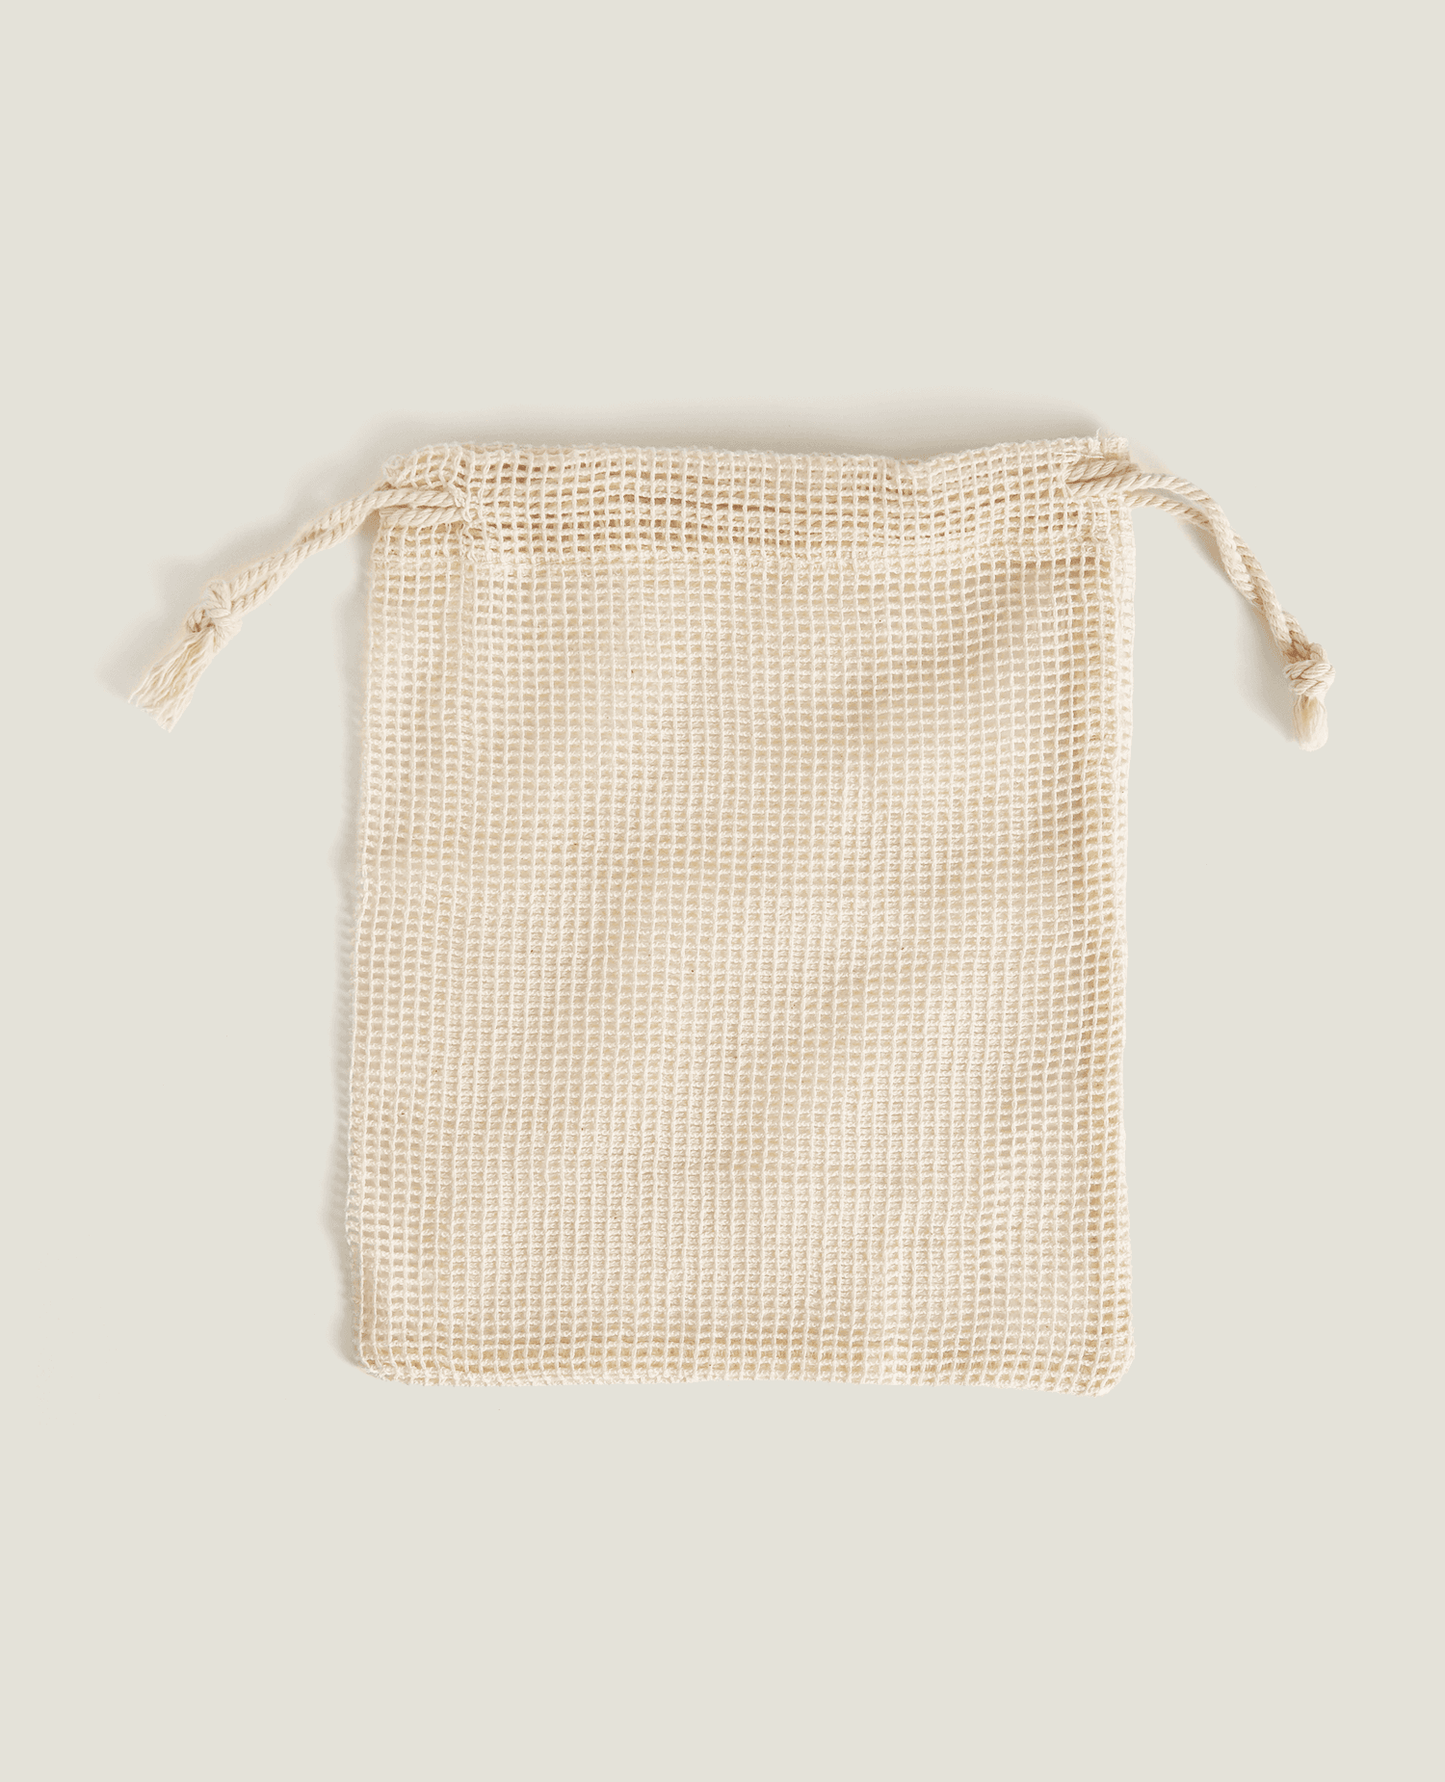 Reusable Cotton Mesh Bag